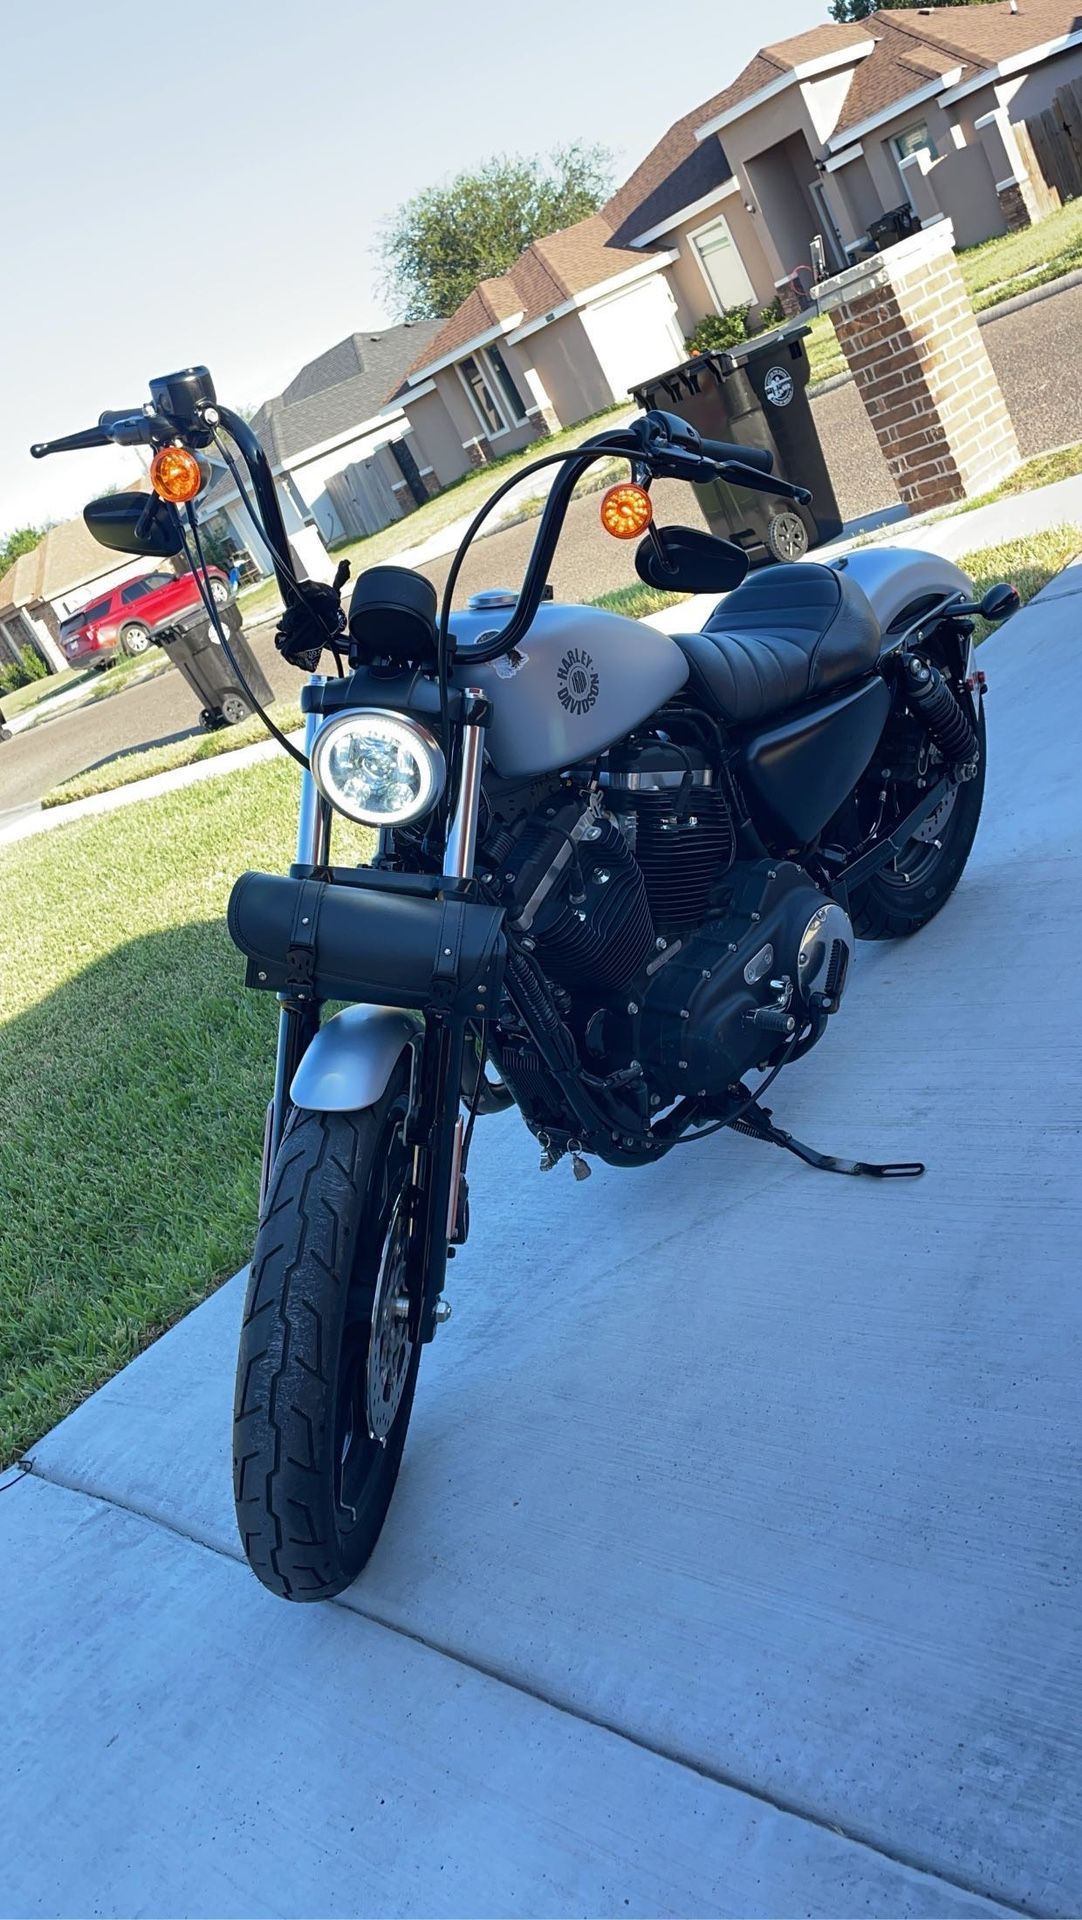 2020 Harley Iron 883 